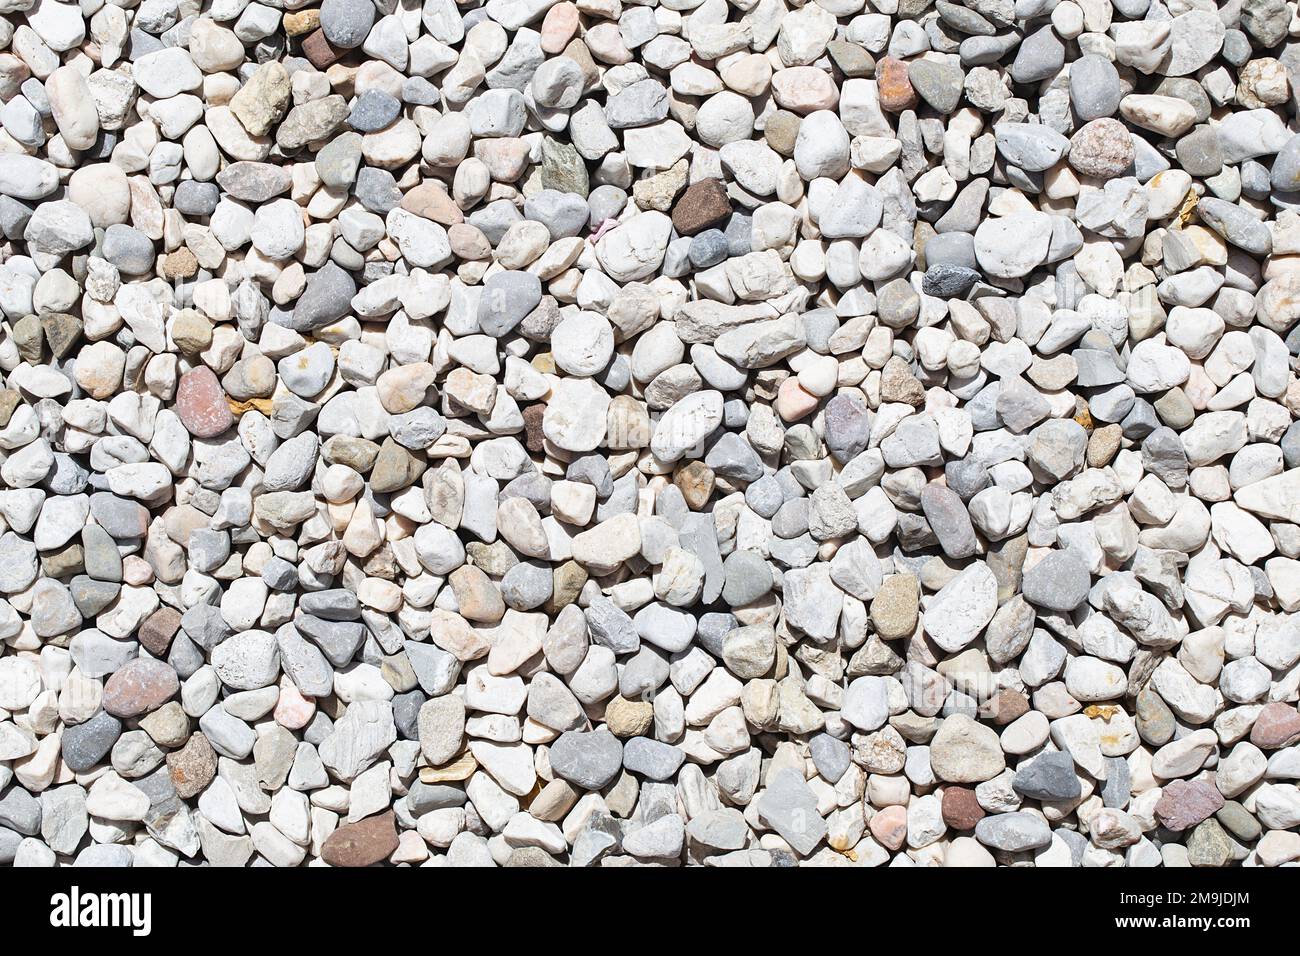 Small white stone gravel background texture. rocky, stony pebbles. Stock Photo